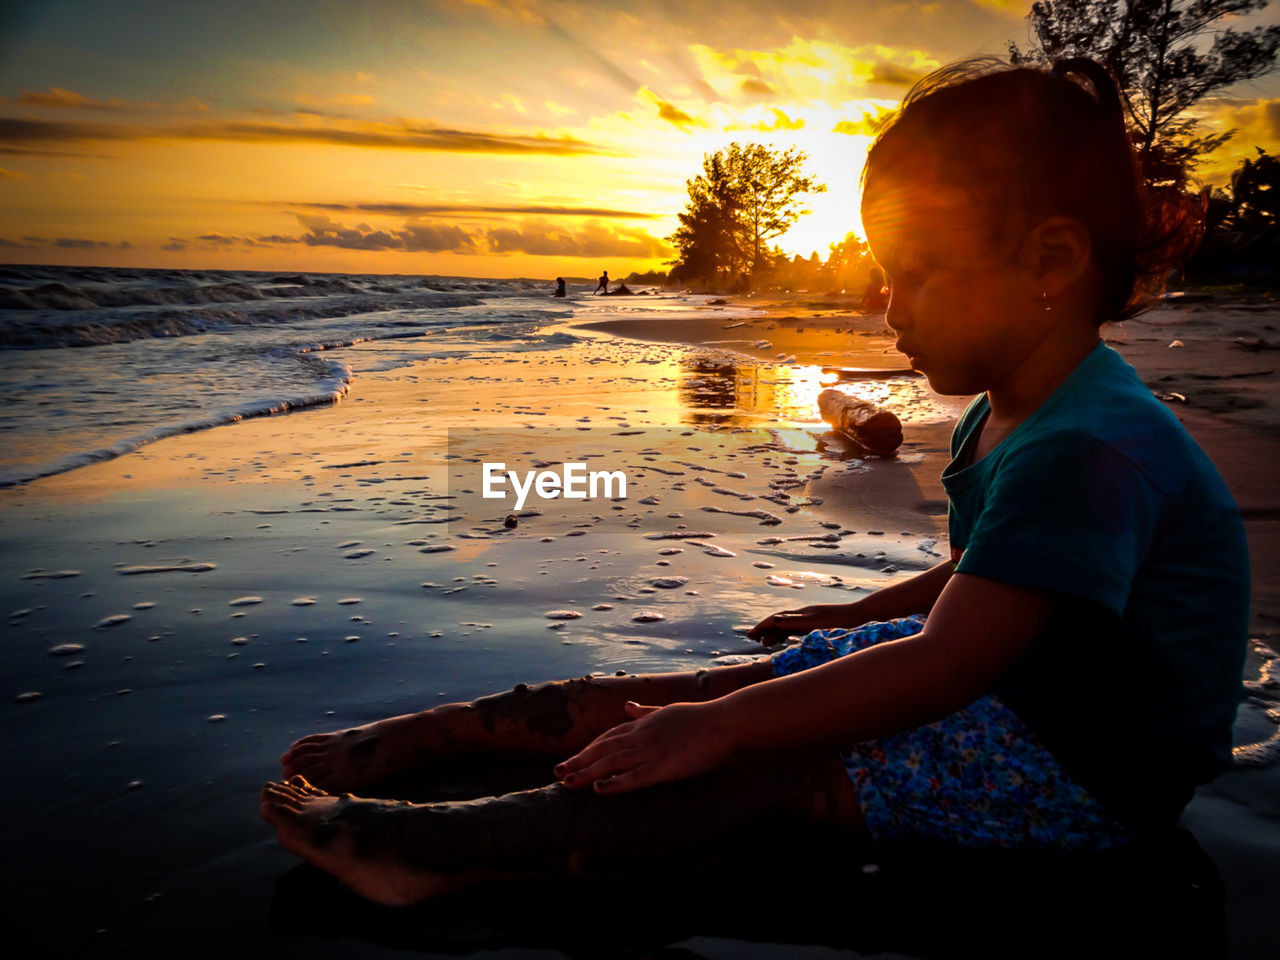 Little girls sitting on shore at beach against sky during sunset